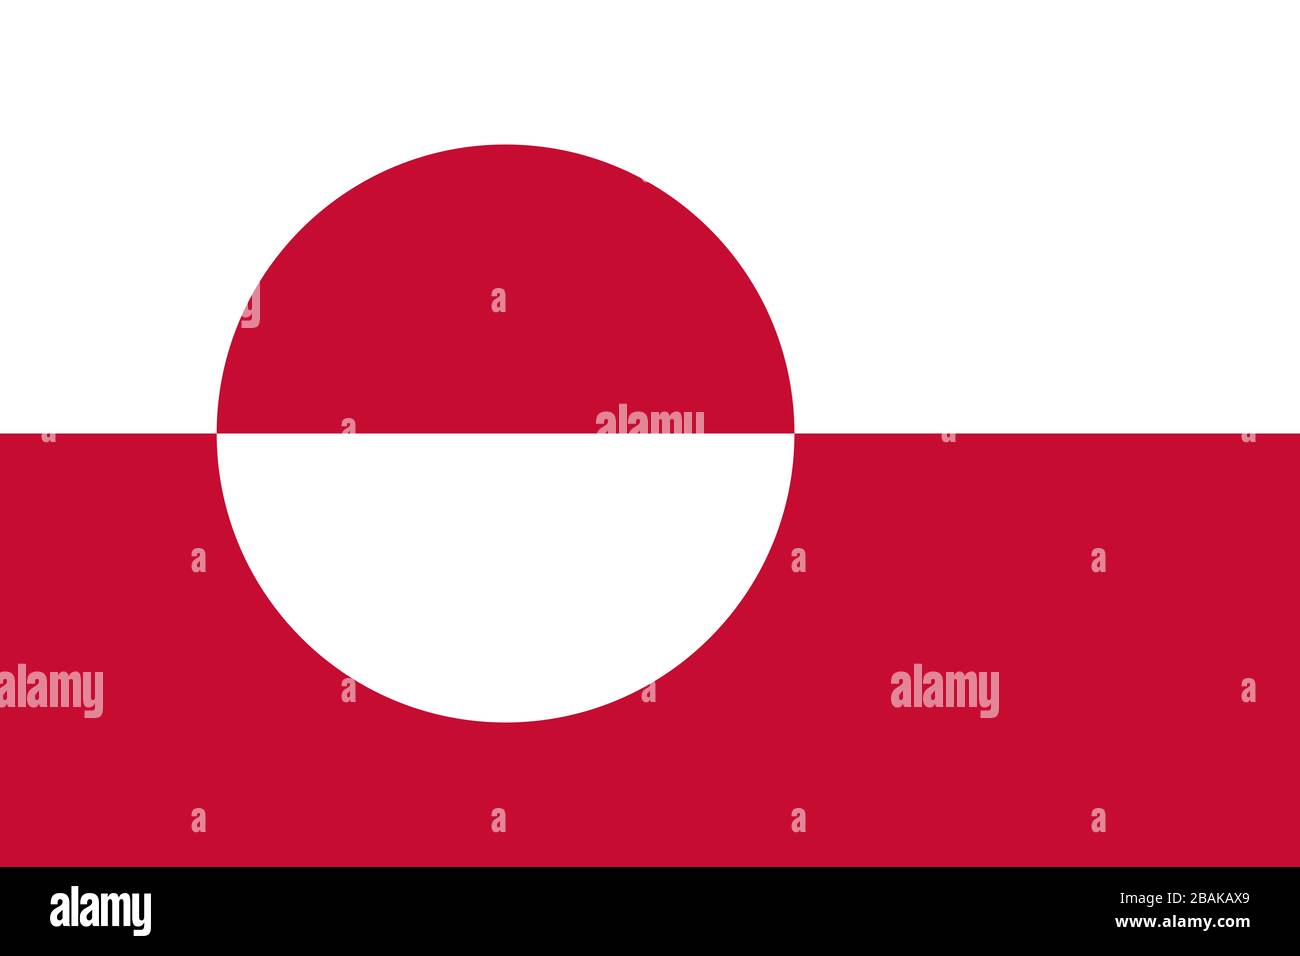 Flagge Grönlands - Standardverhältnis der Grönlandfahne - True RGB-Farbmodus Stockfoto